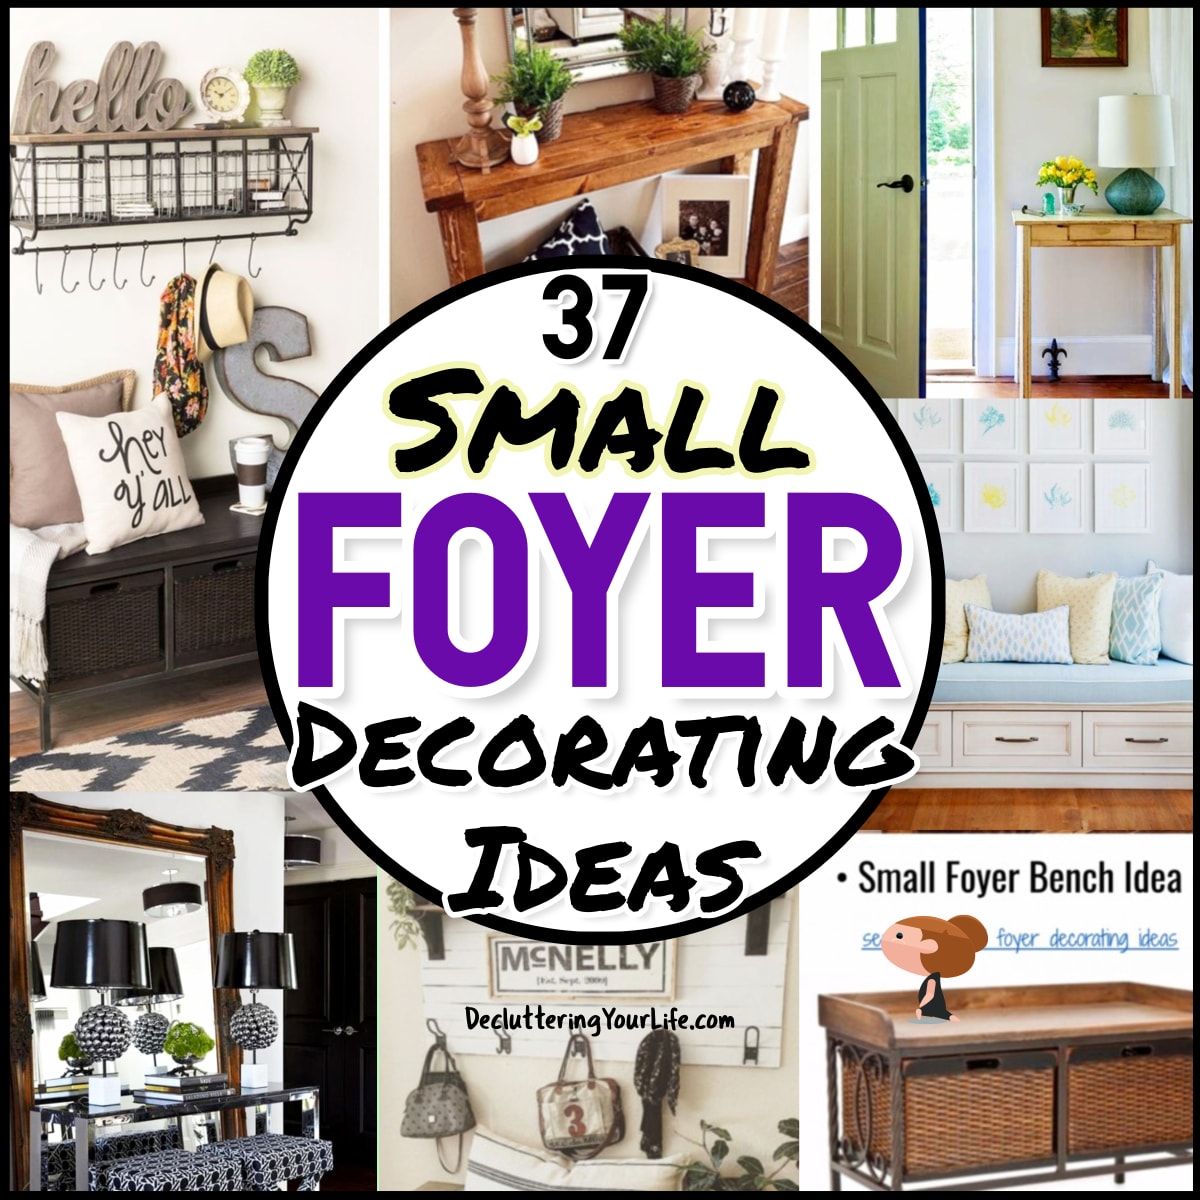 Small Foyer Decorating Ideas - 37 small entryway decor ideas for decorating a small foyer on a budget